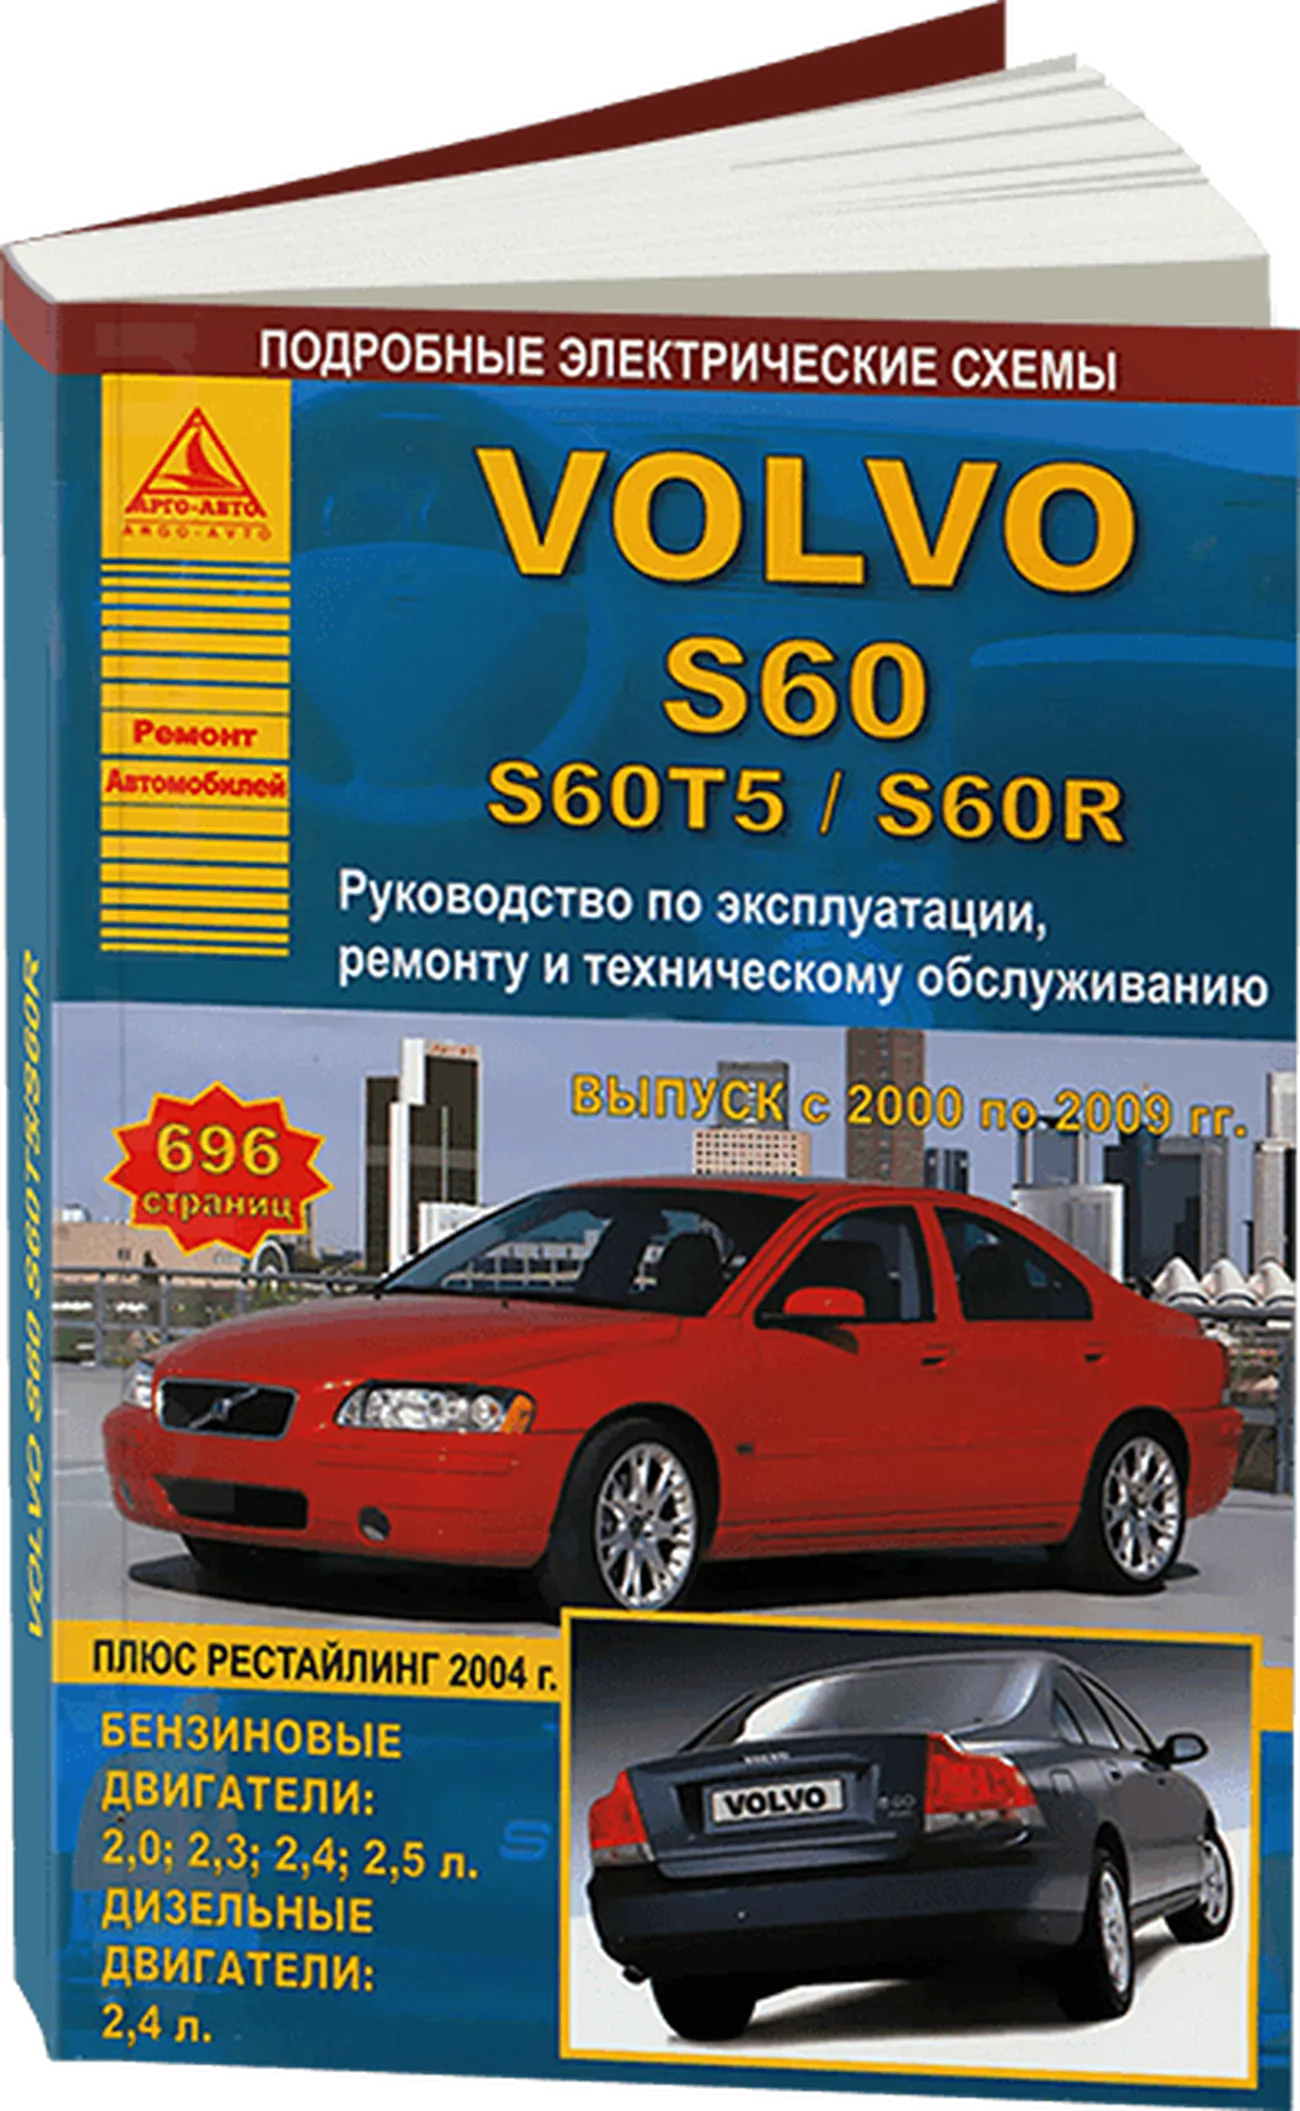 Книга: VOLVO S60 / S60T5 / S60R (б , д)  2000-2009 г.в., рем., экспл., то | Арго-Авто